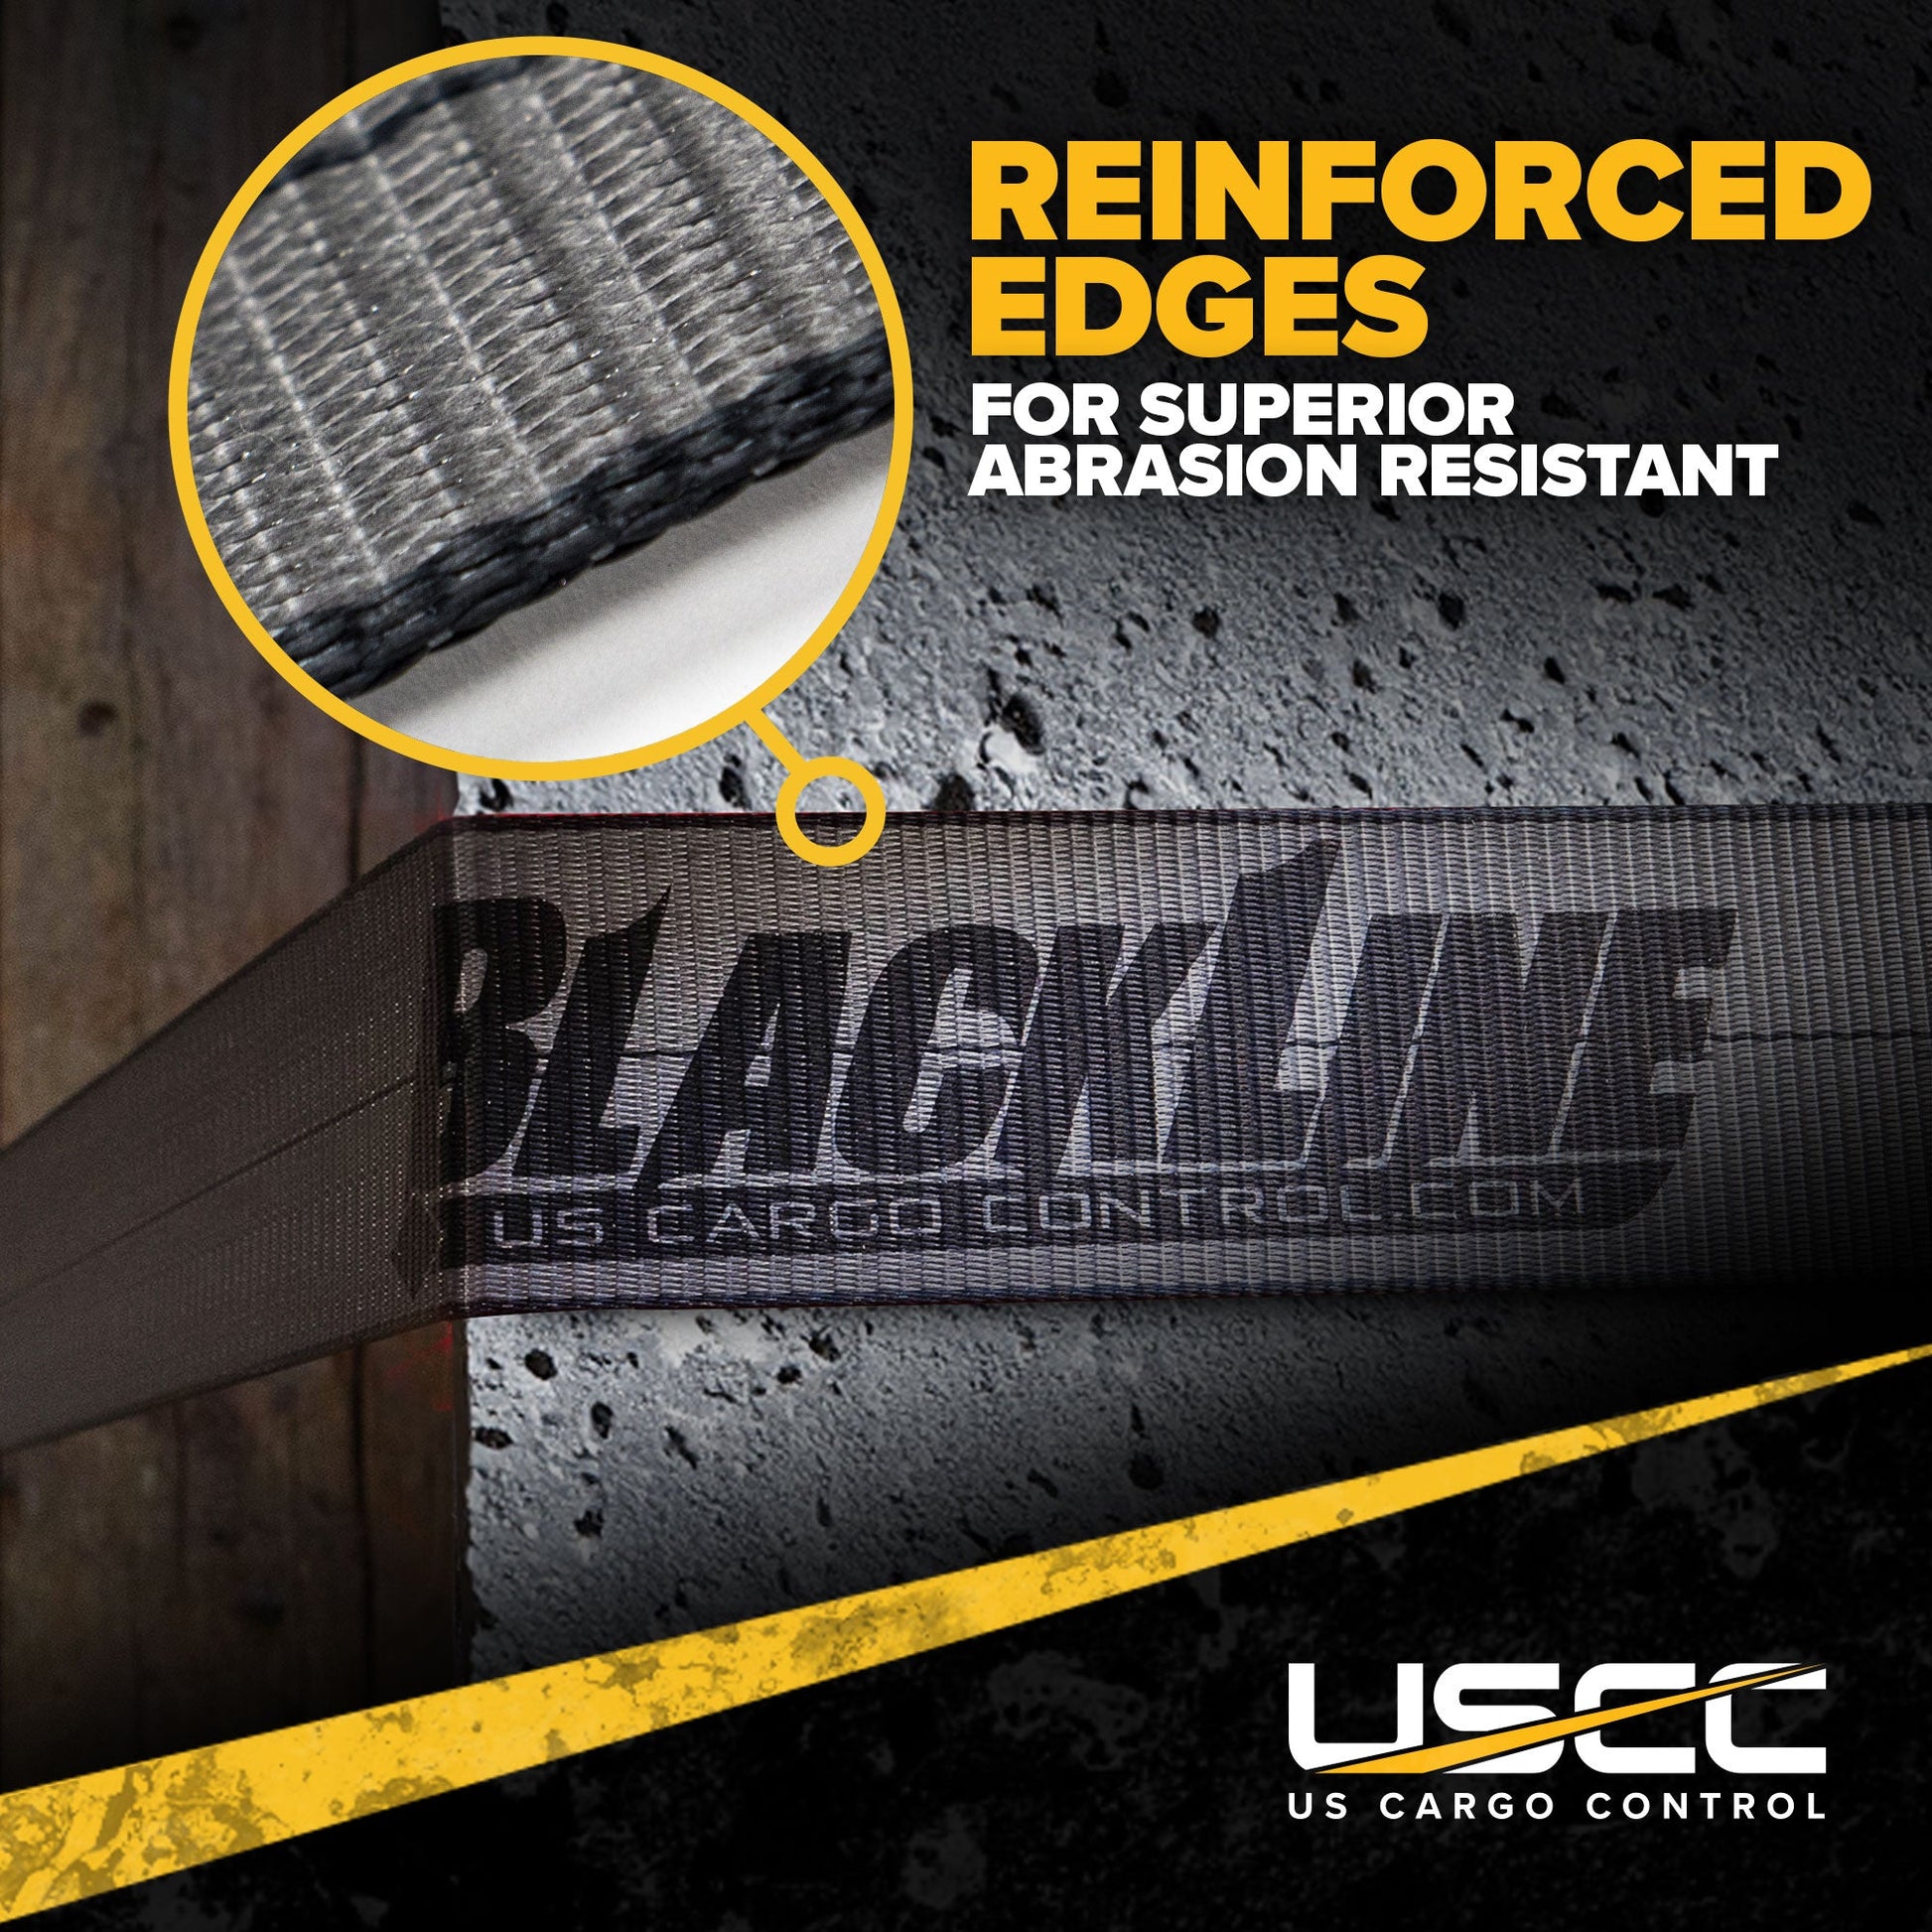 18' heavy-duty ratchet strap -  reinforced edges are abrasion resistant